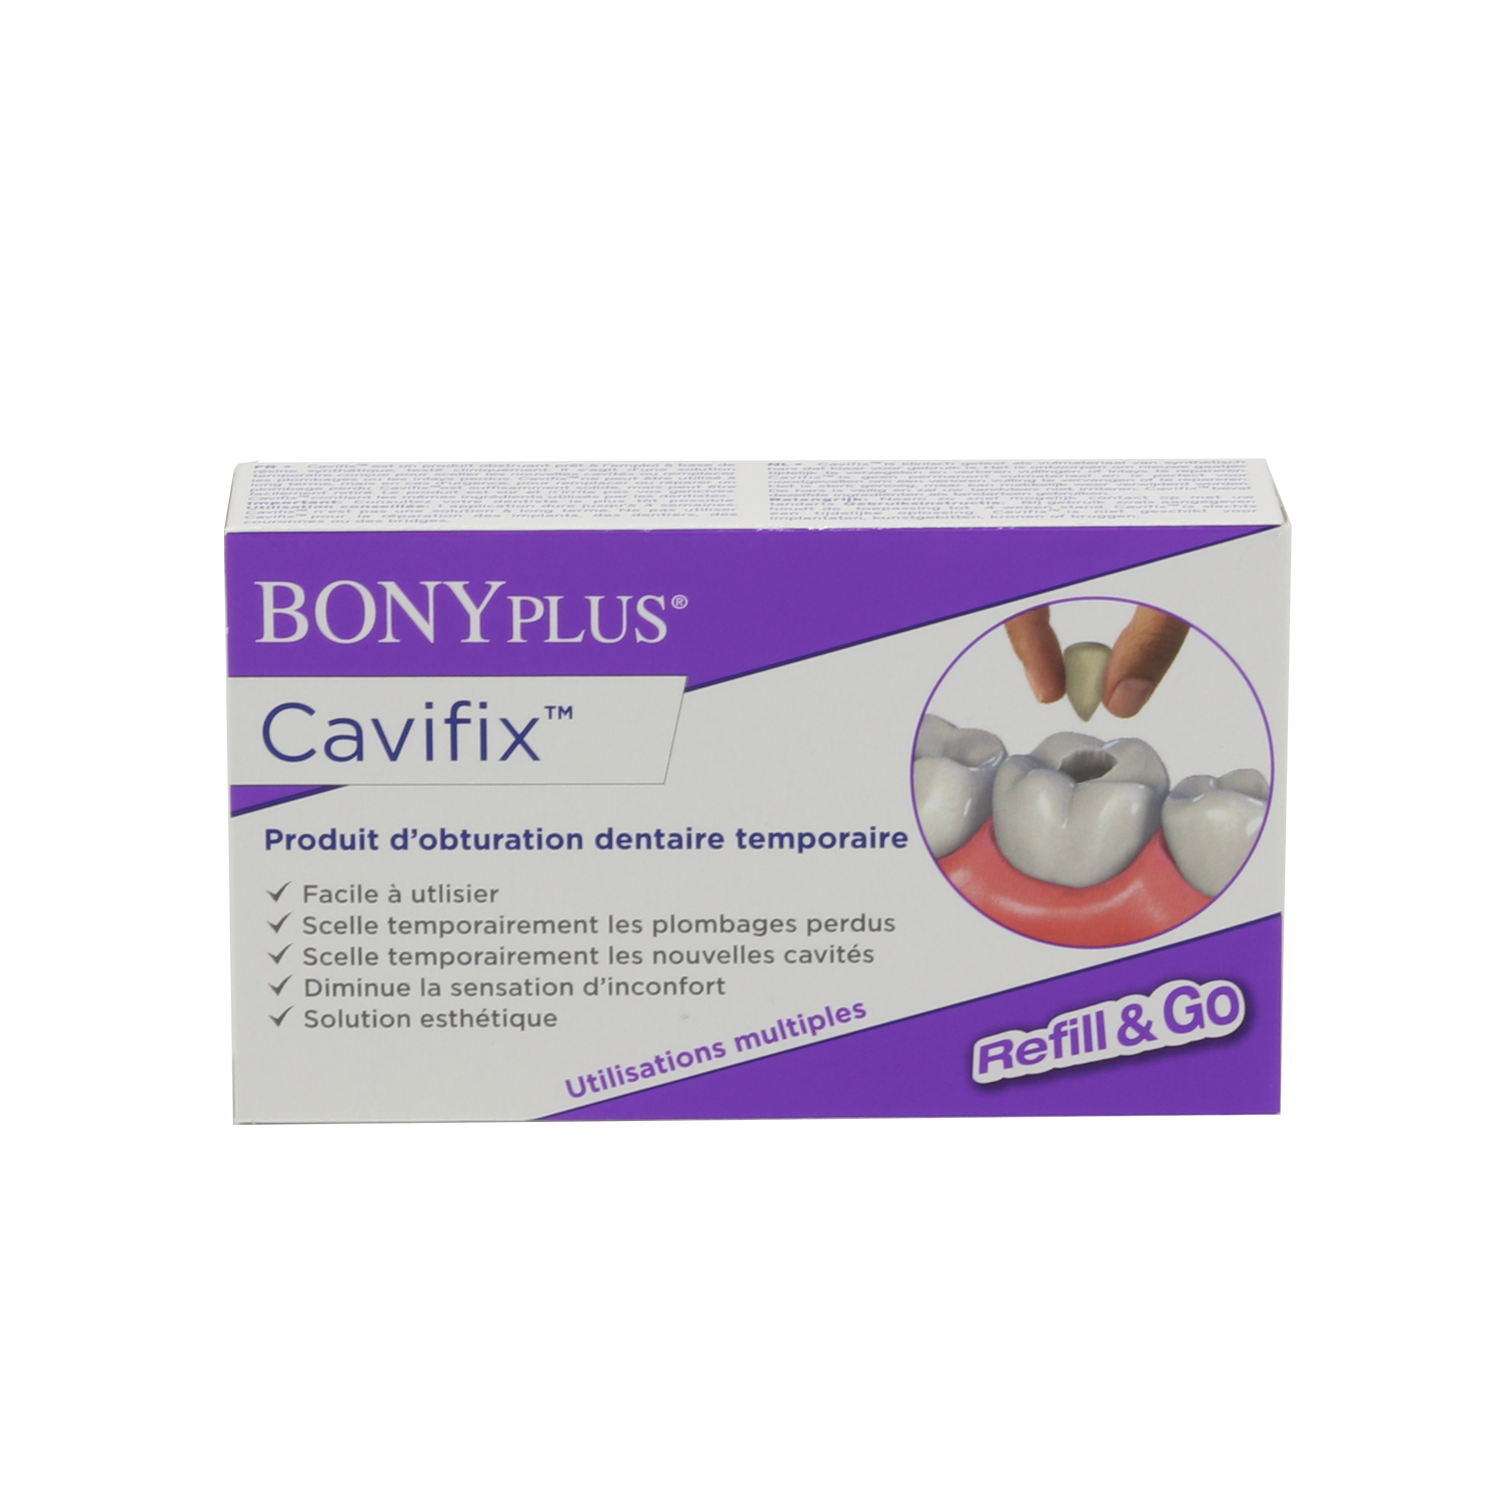 BONYPLUS Cavifix Seals lost cavities and fillings